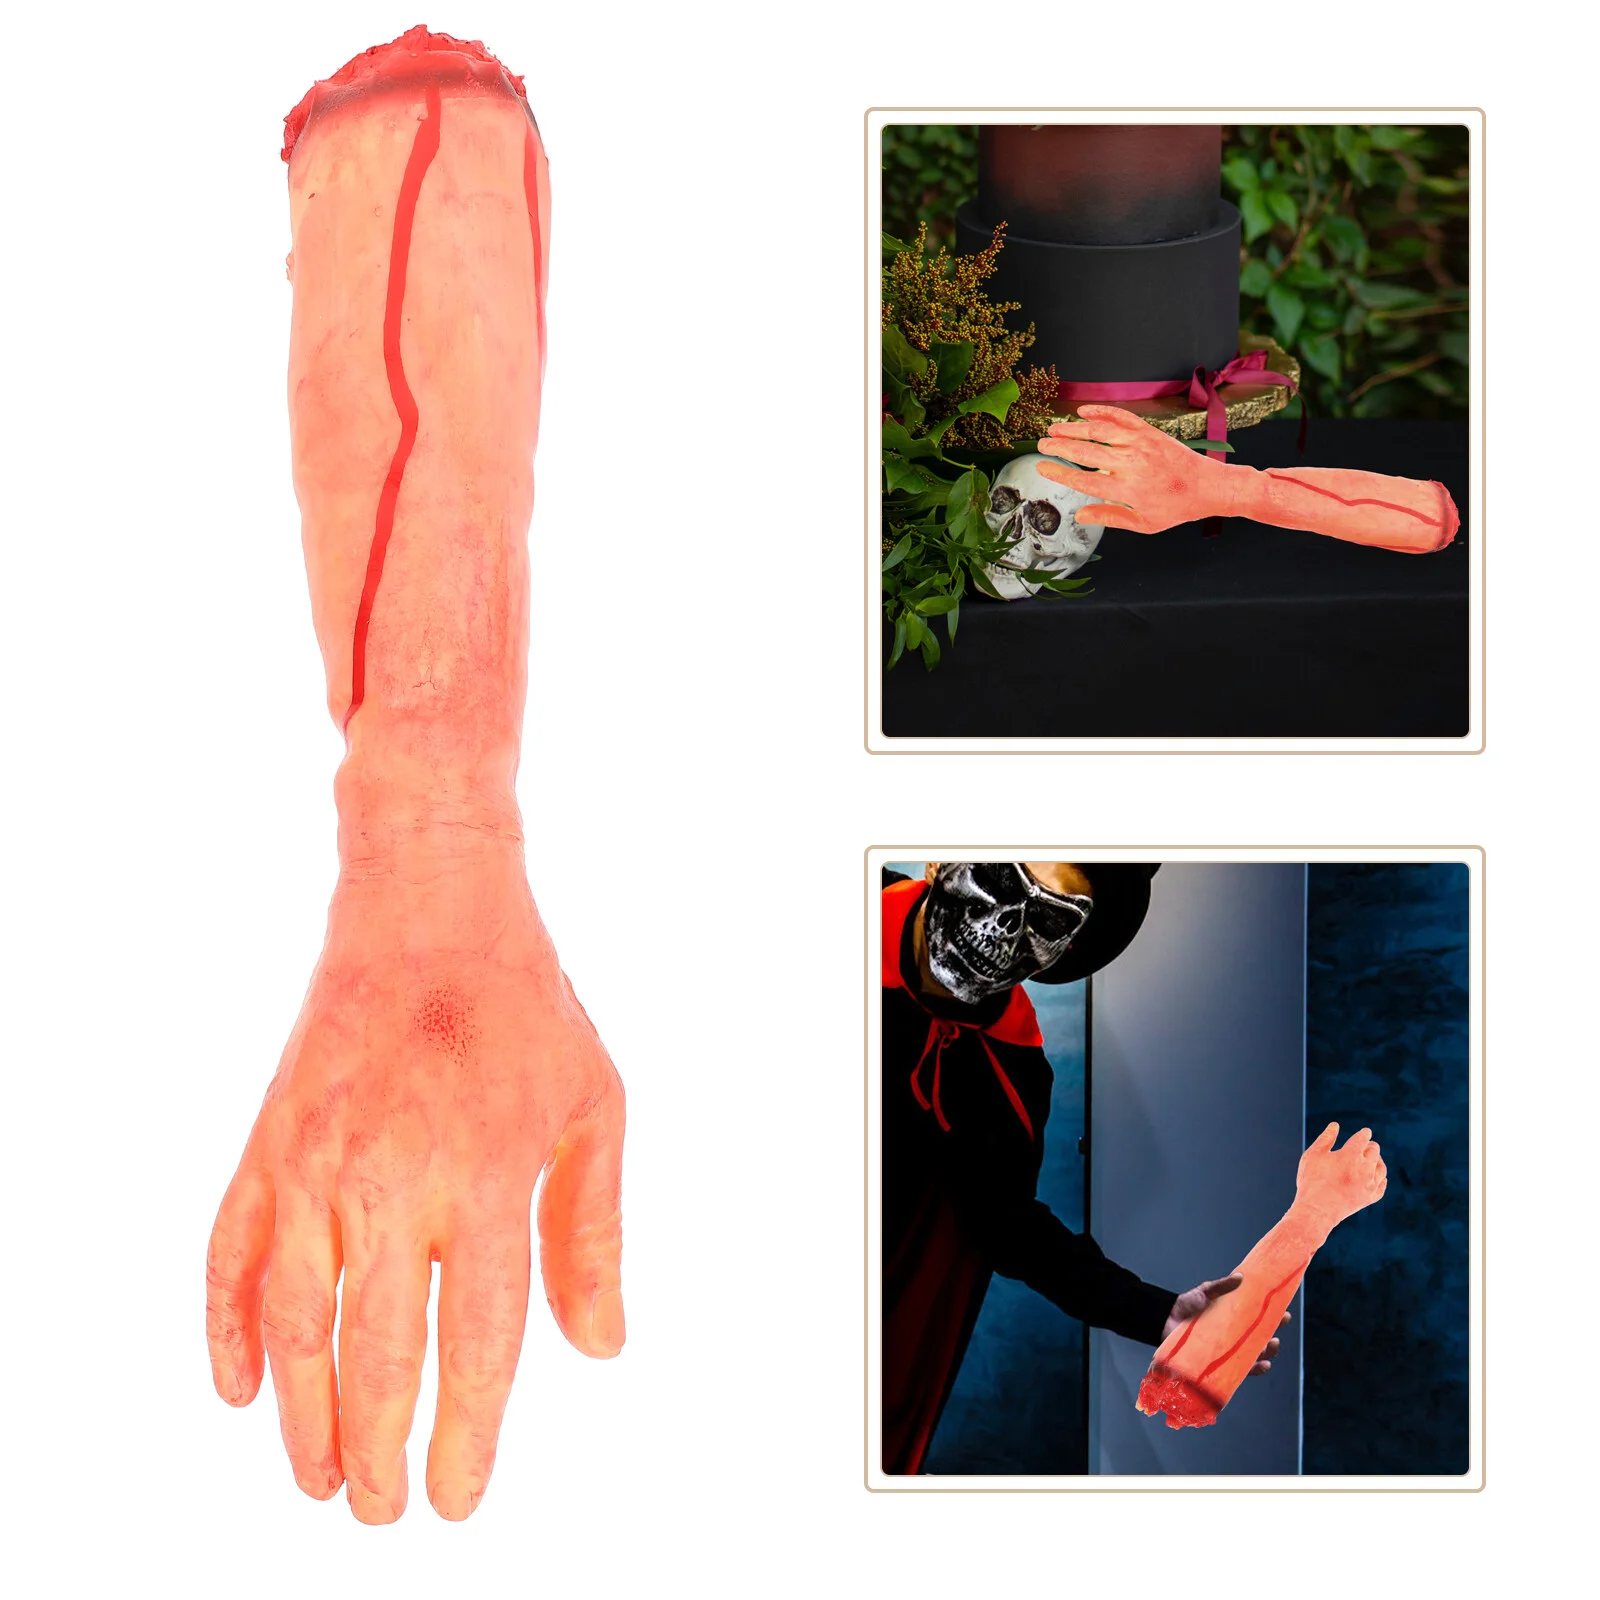 

Simulation Broken Hand Halloween Decorations Scary Accessories Prank Prop Horror Hands Terror Body Heart Parts